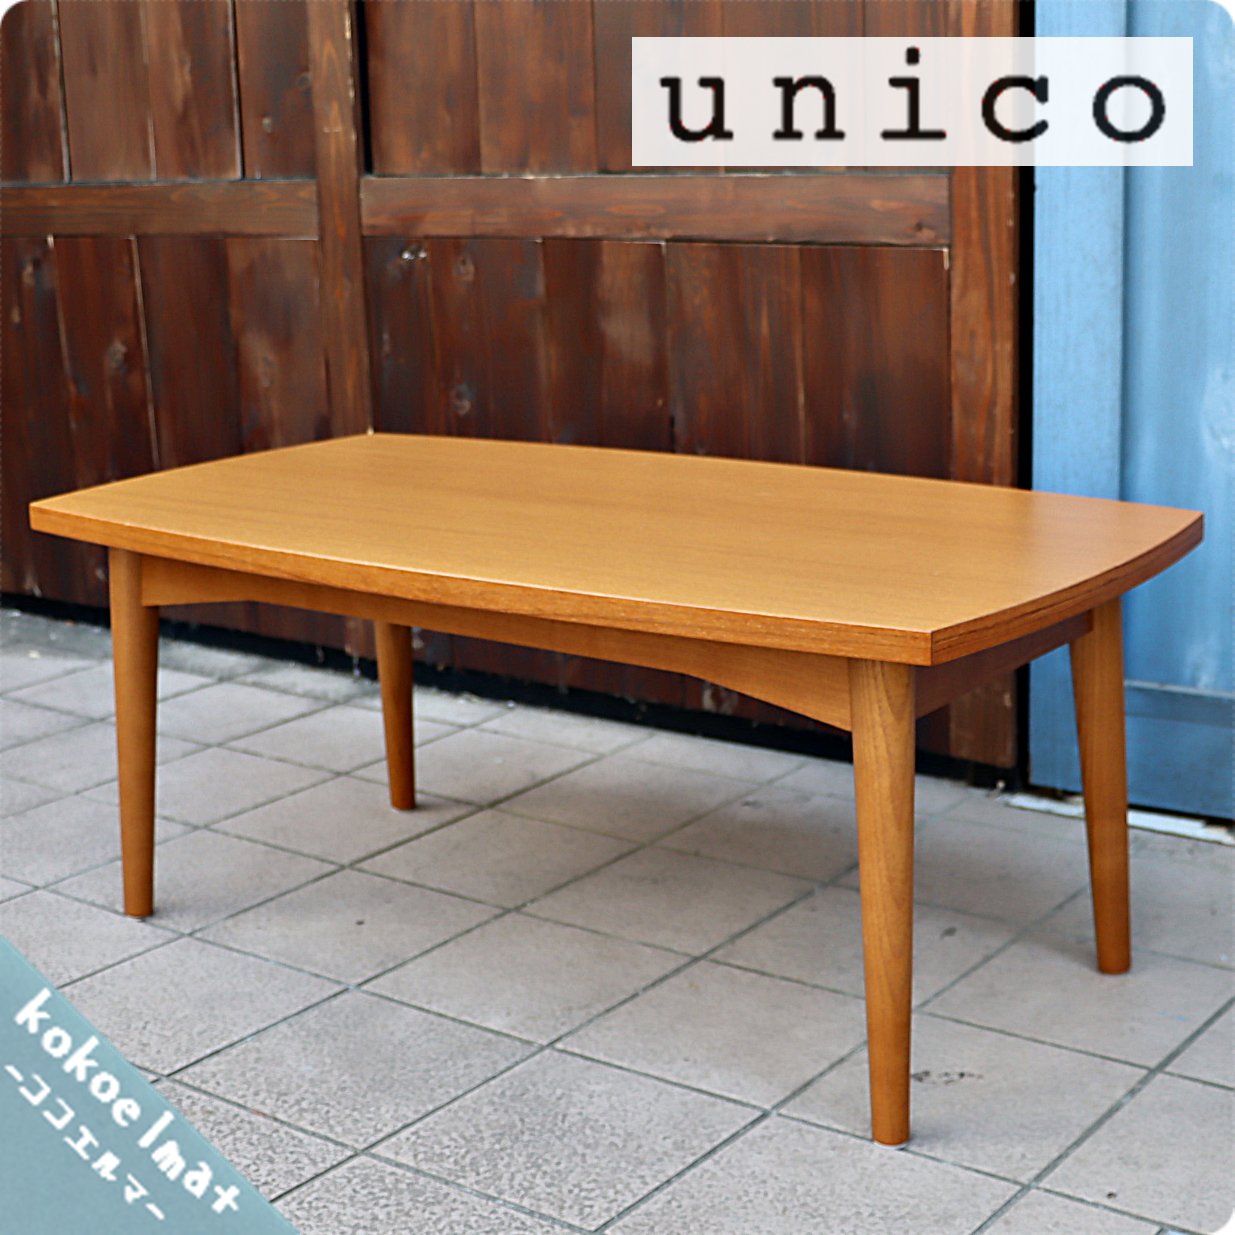 unico(ウニコ)のHOLM(ホルム)シリーズ ローテーブルです！ナチュラルな風合いのチーク材を使用した北欧スタイルのレトロなデザインのリビング テーブル。ヴィンテージテイストにもおススメです♪ - kokoelma -ココエルマ- 雑貨・中古家具・北欧家具・アンティーク家具の ...